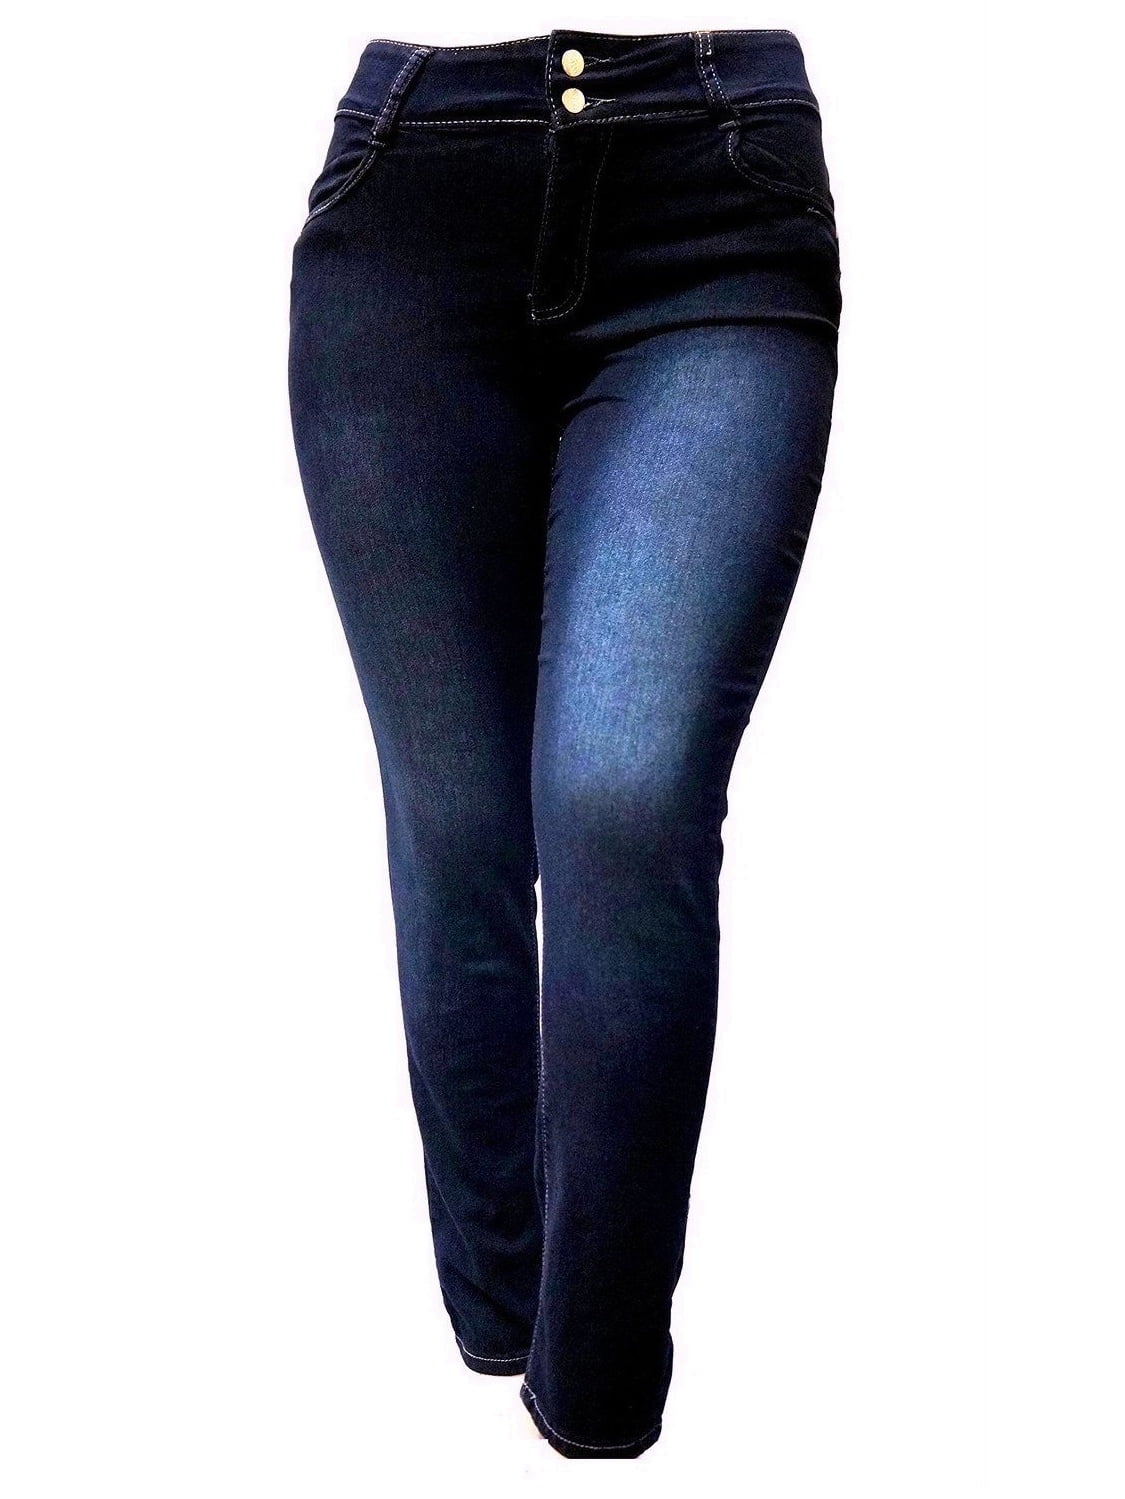 dark blue jeans skinny